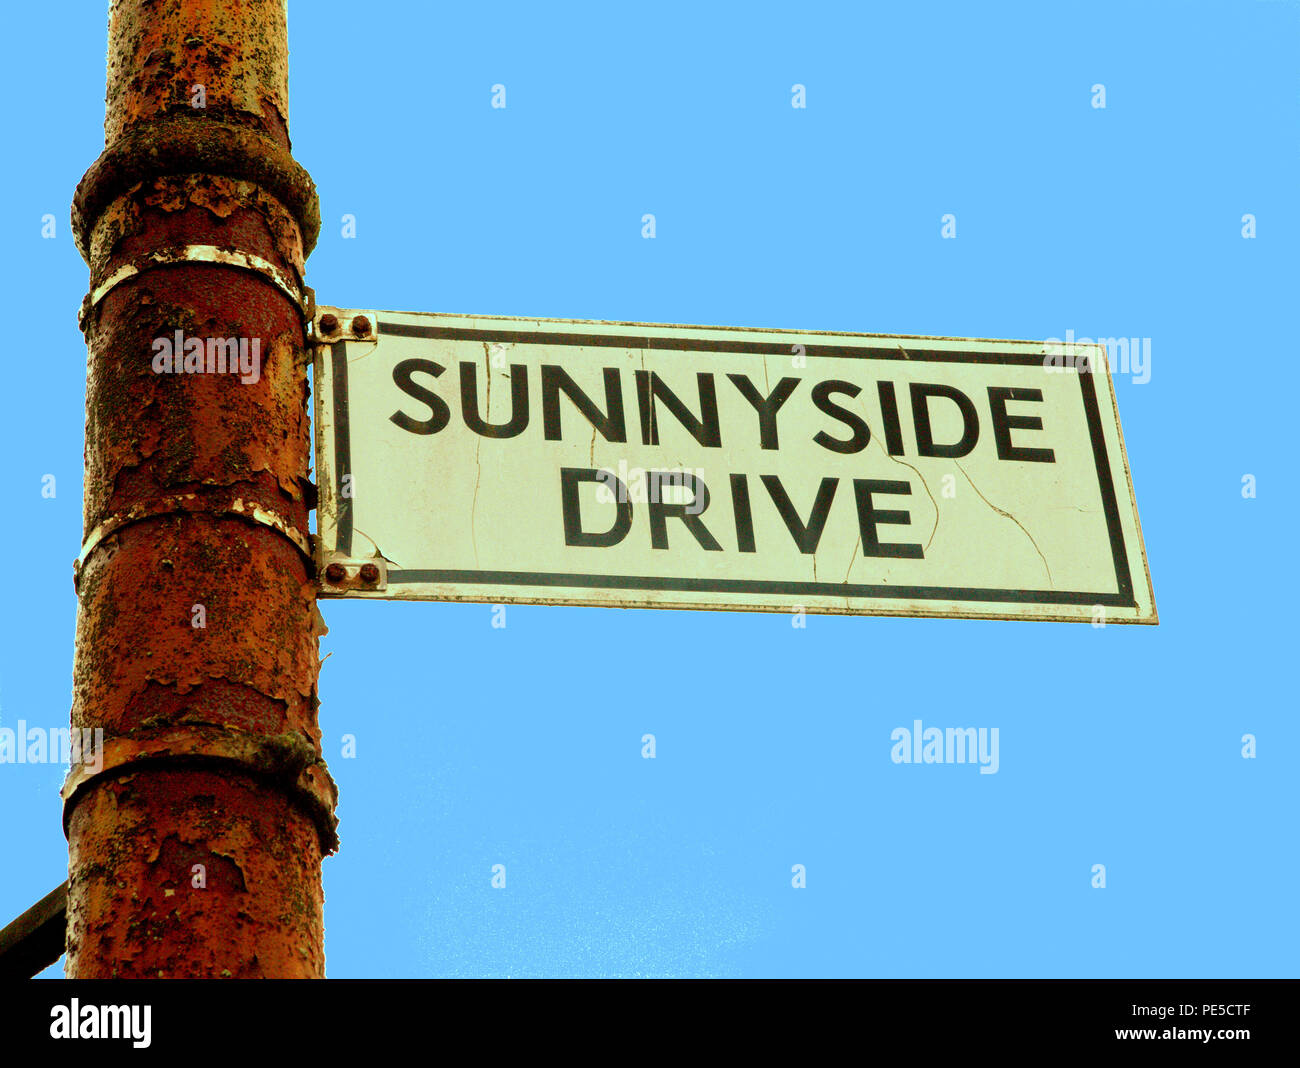 sunnyside drive street sign concept blue skies positivity Stock Photo